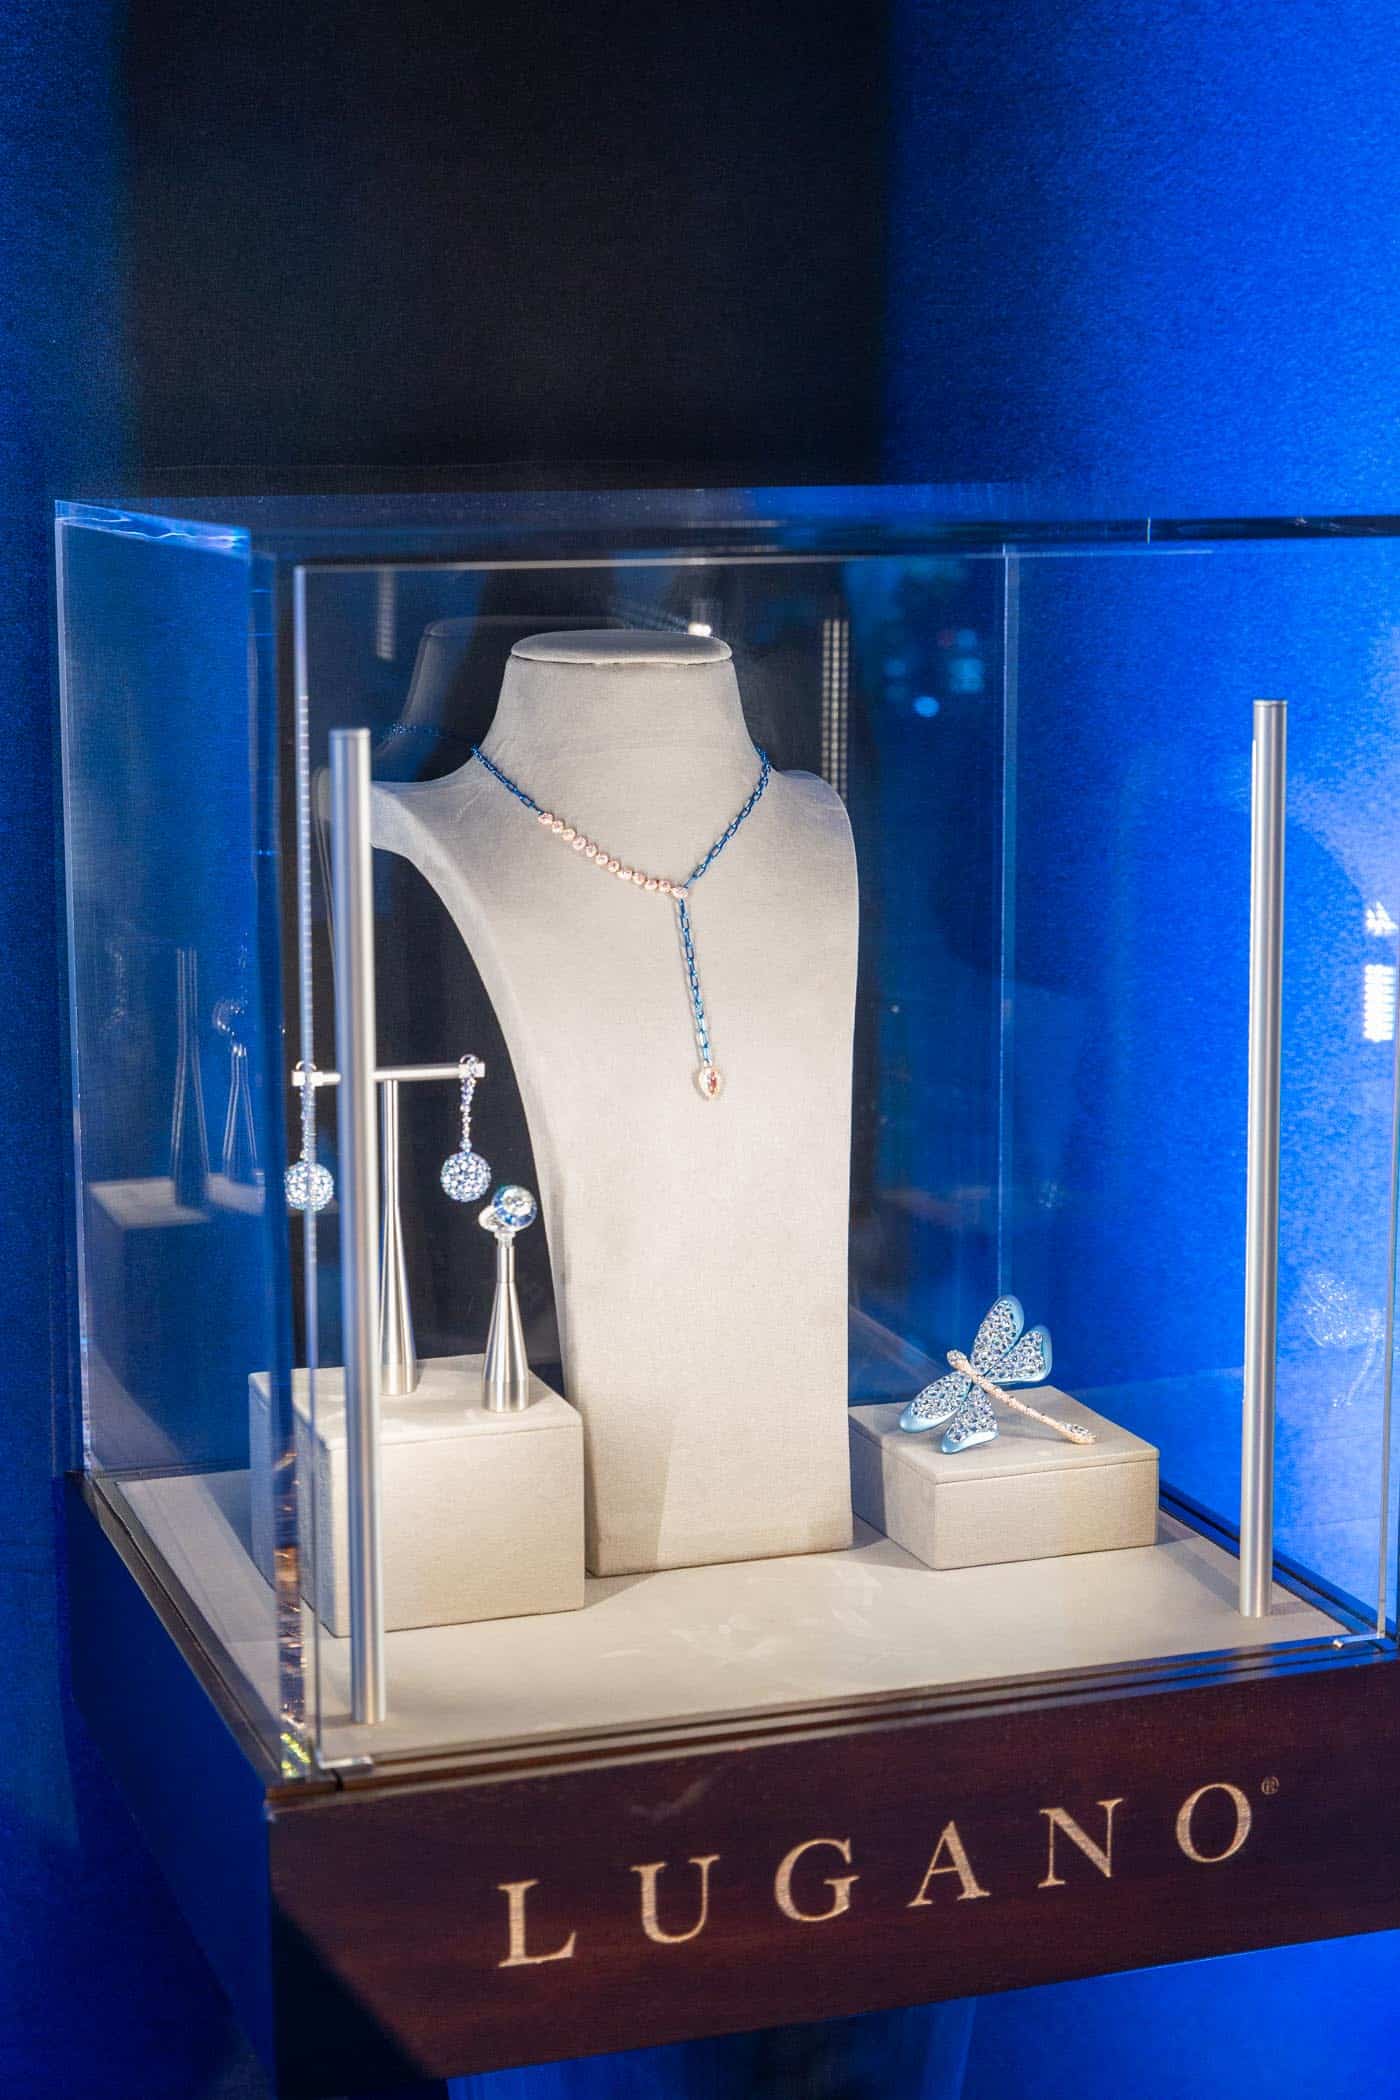 Lugano Diamonds on display